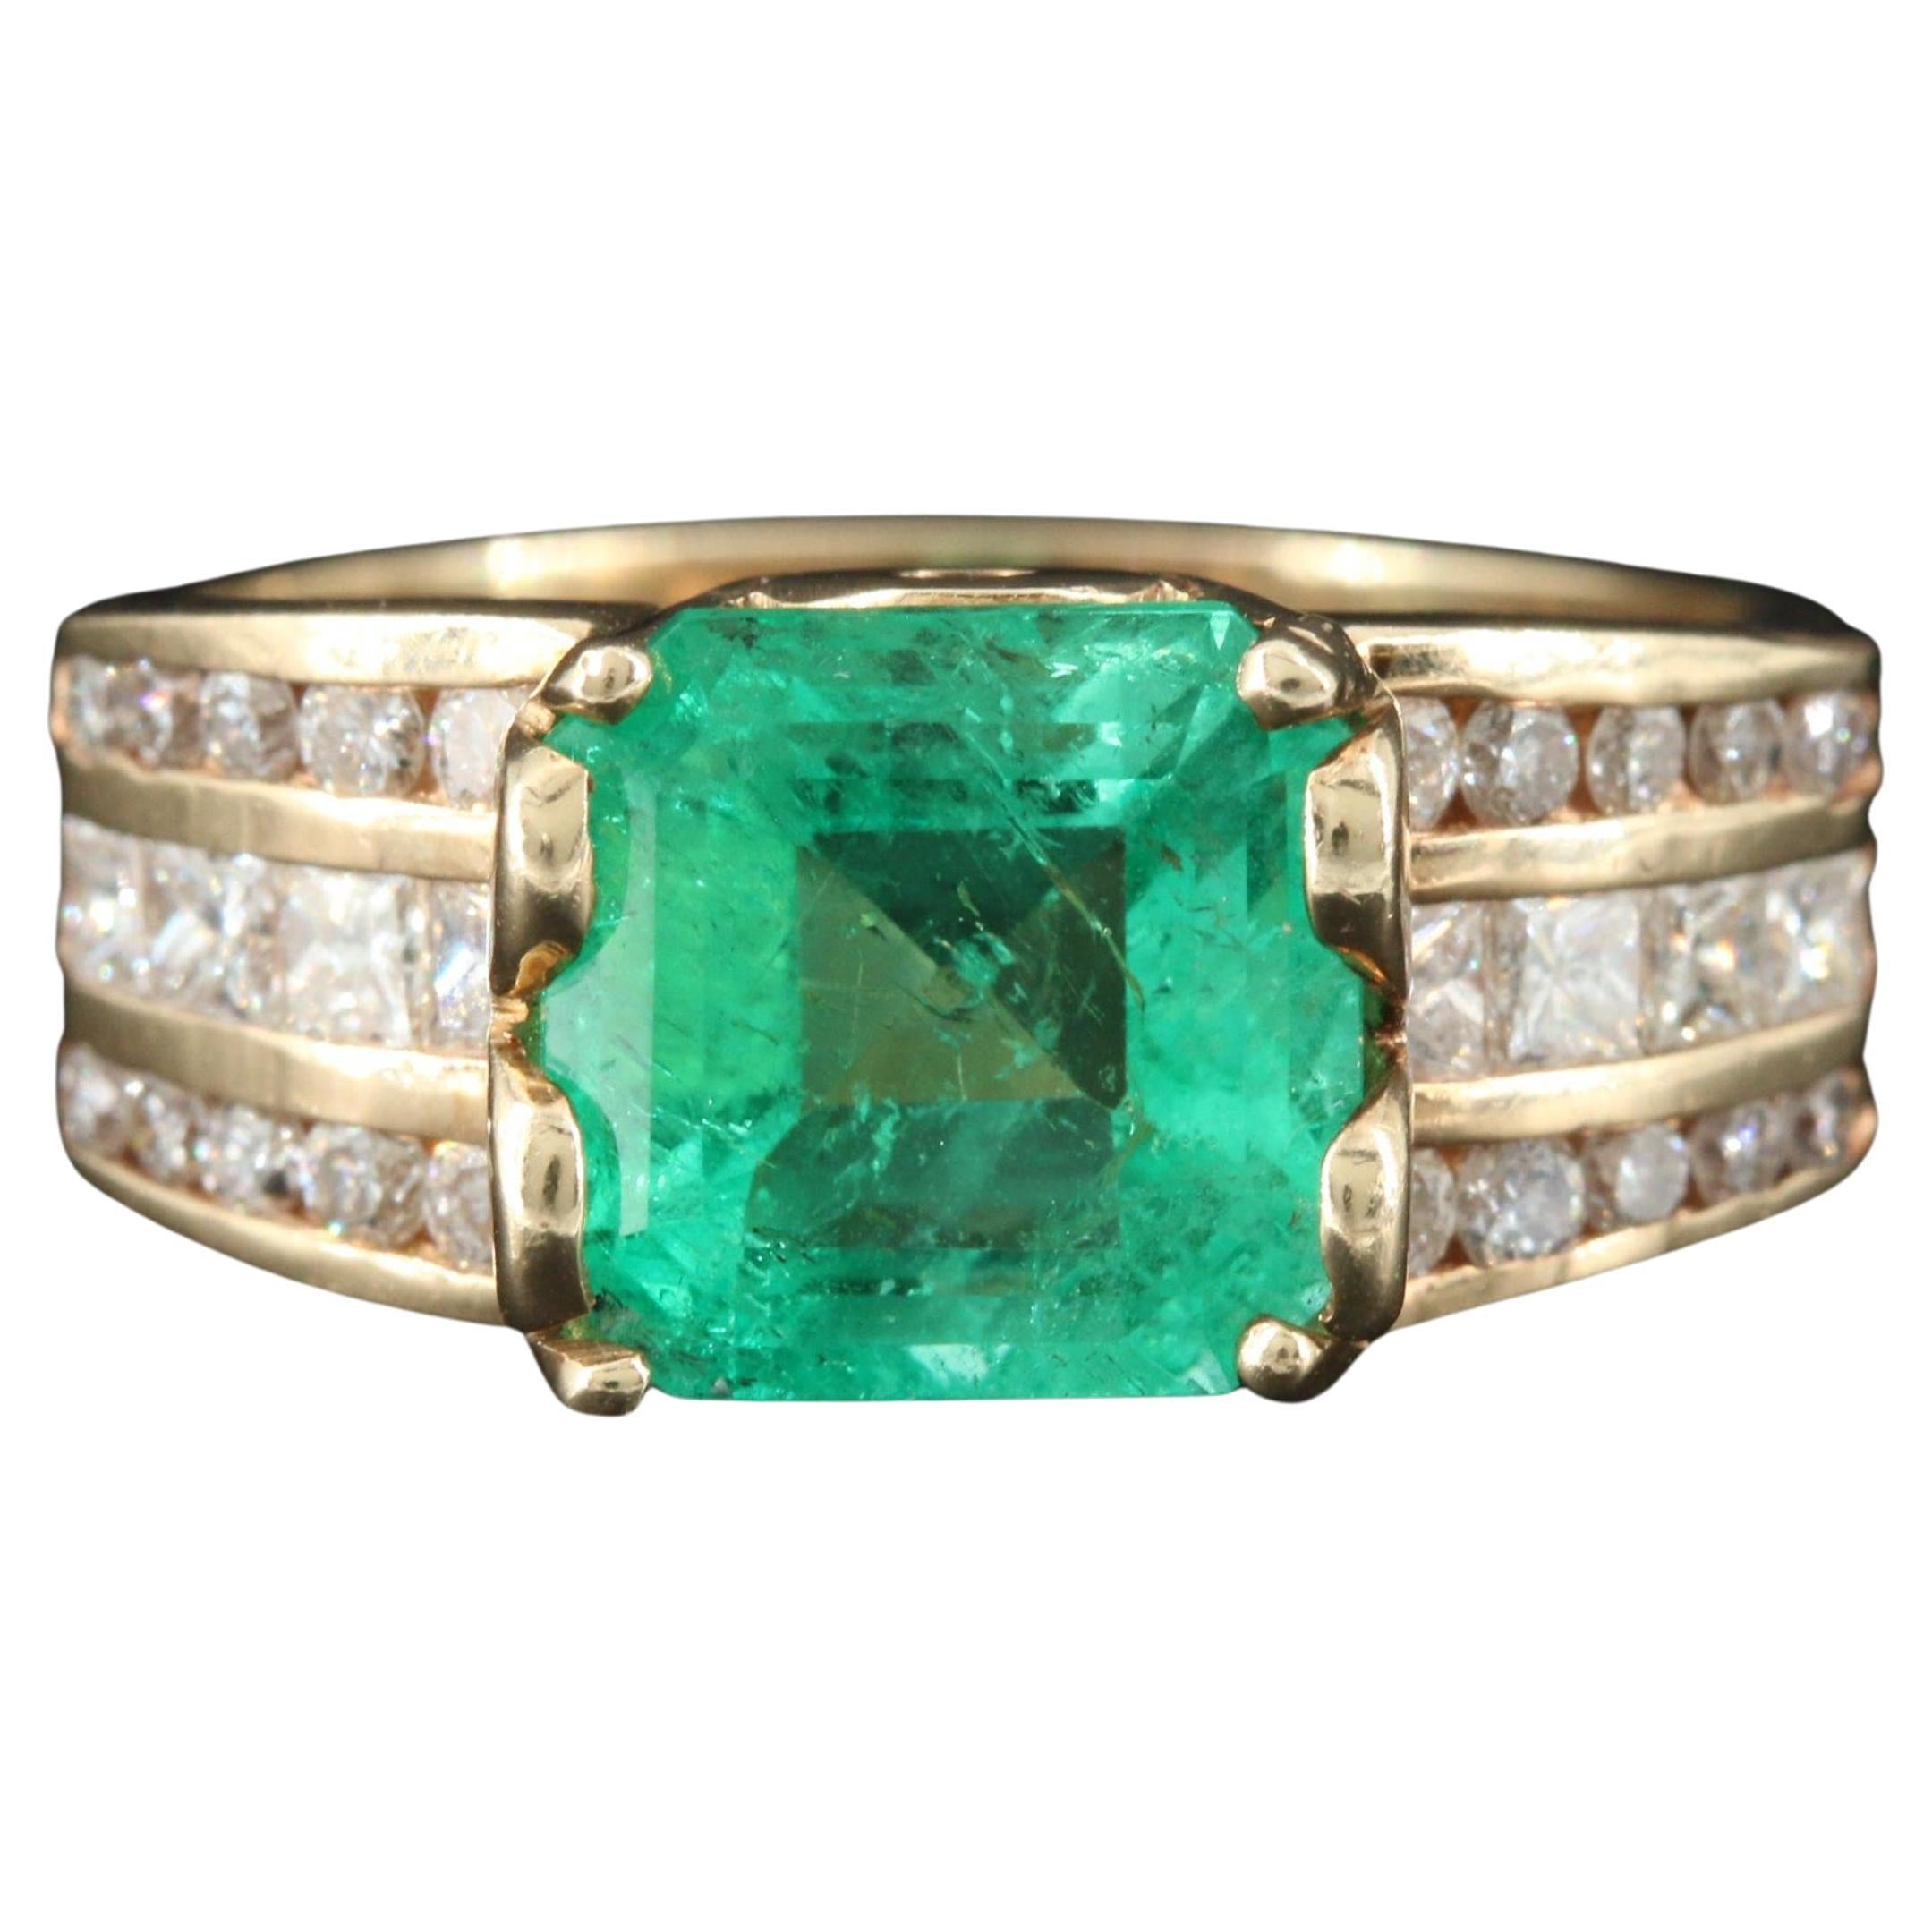 3.4 Carat Emerald Diamond Engagement Ring Art Deco Diamond Wedding Band